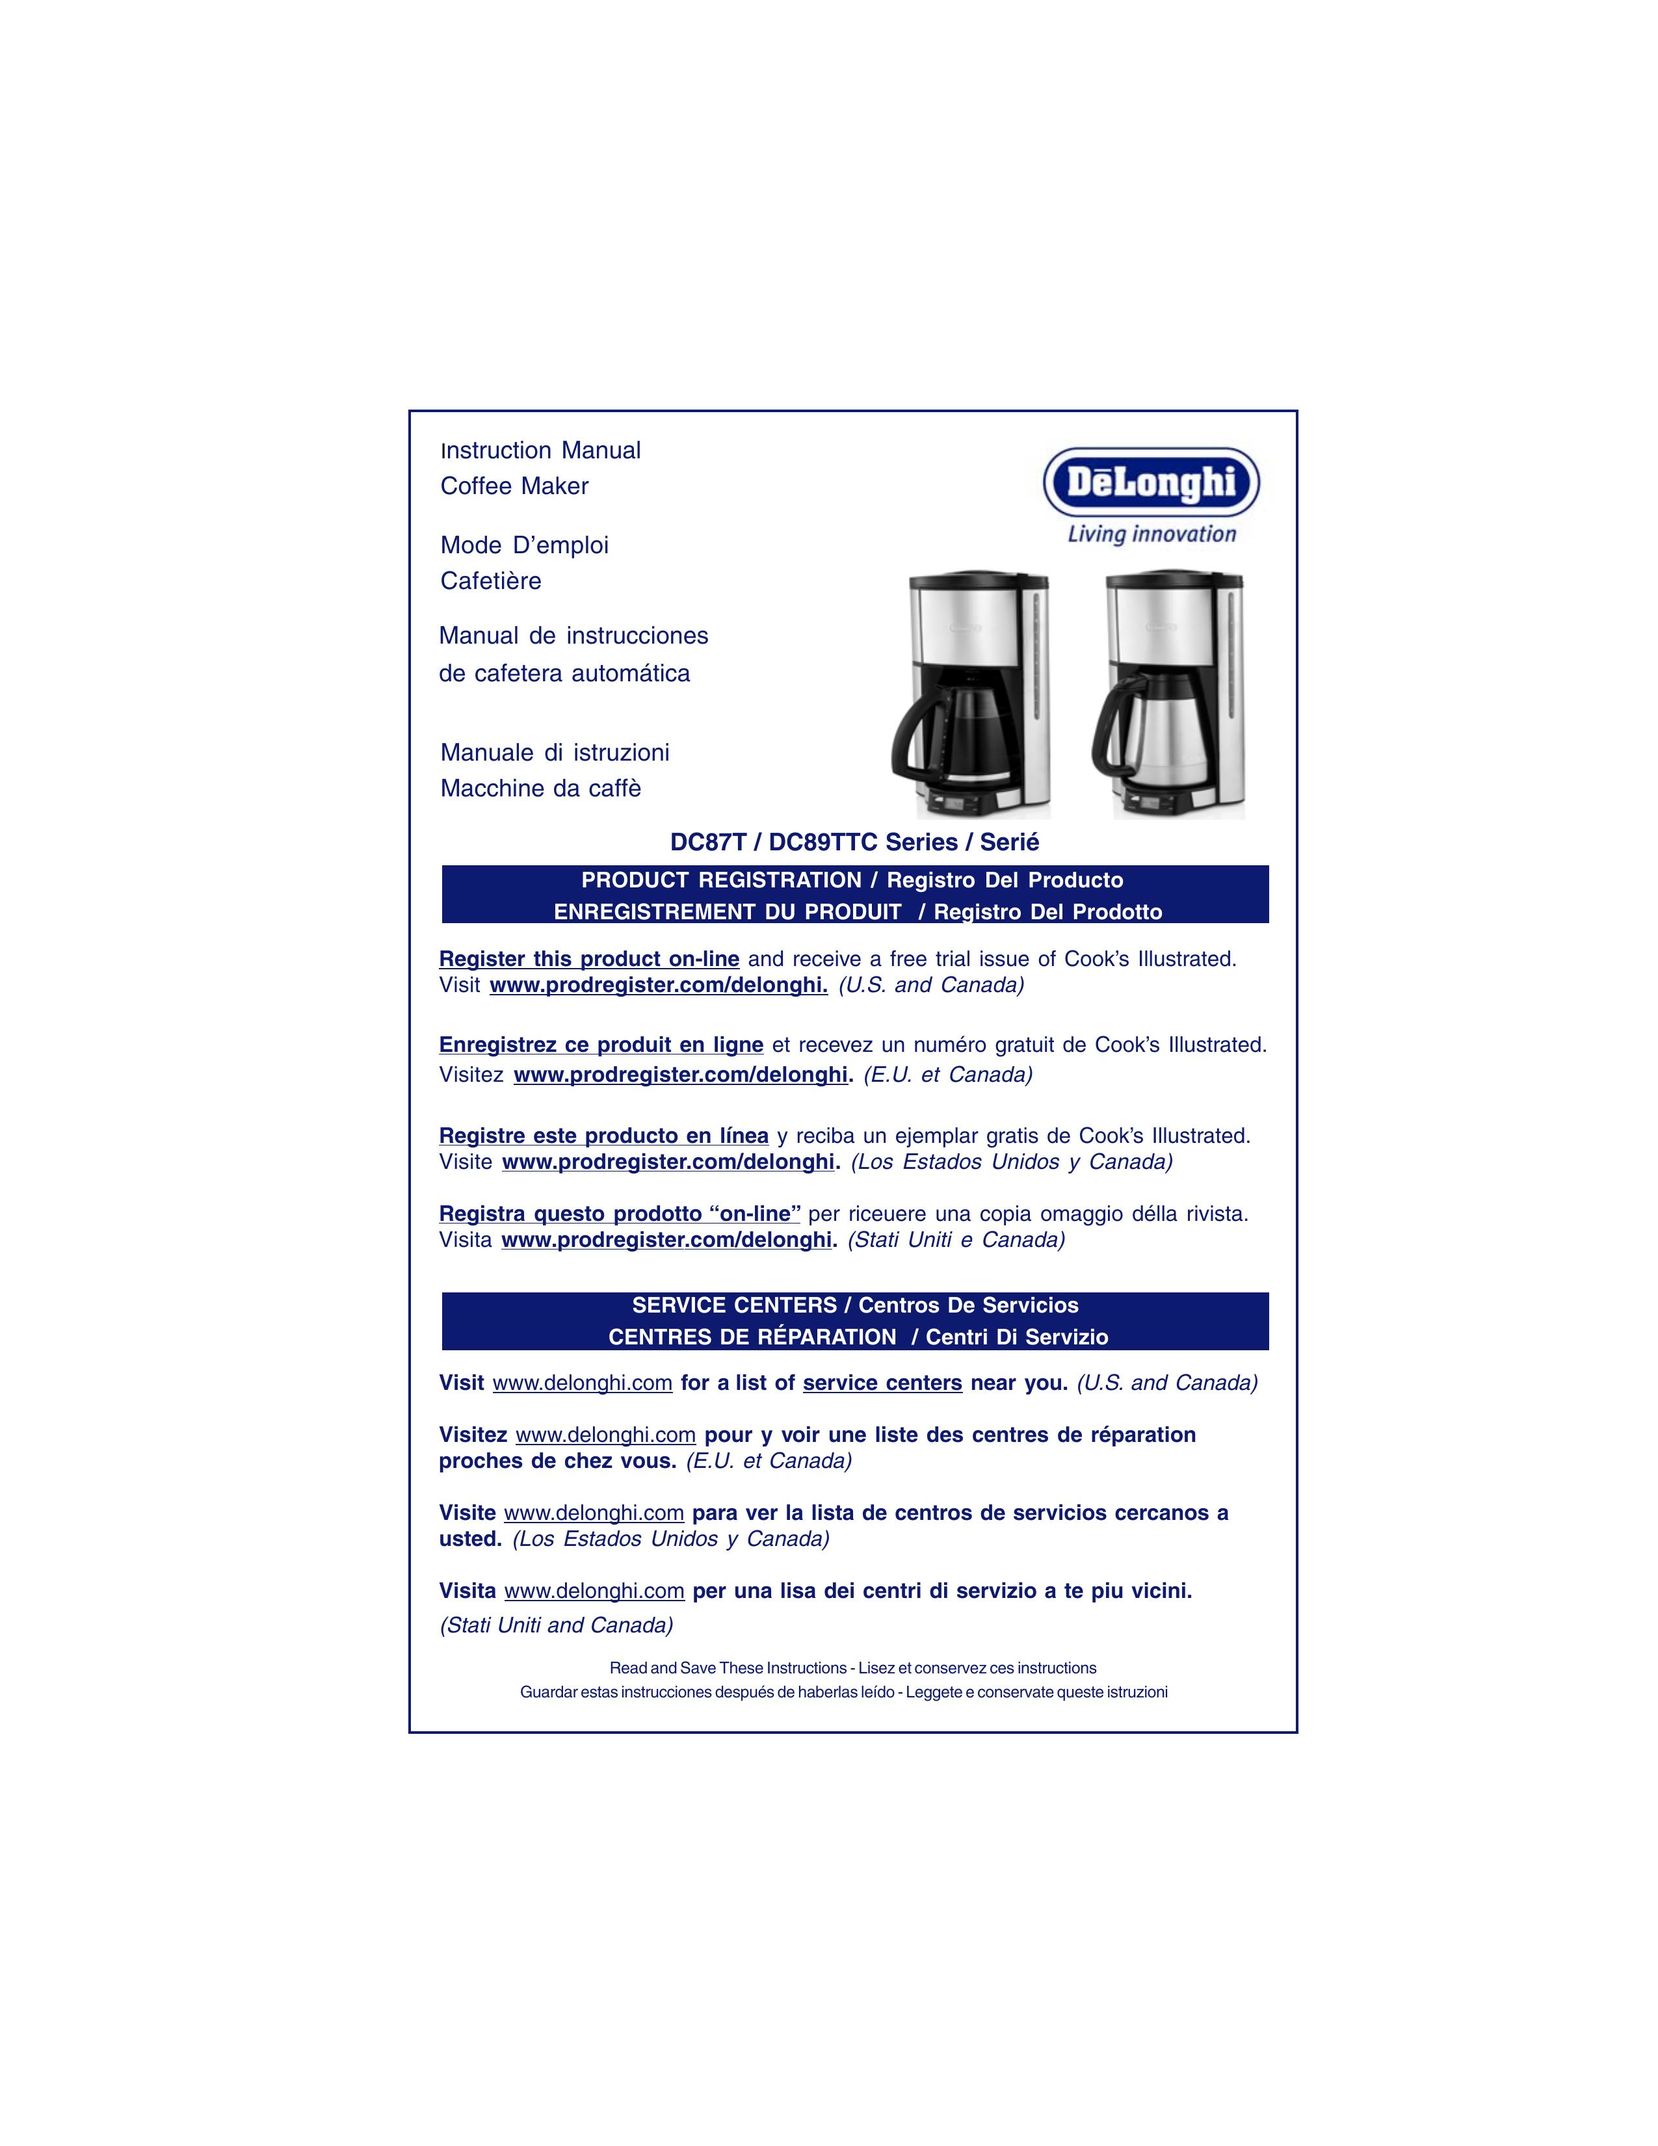 DeLonghi DC87T Series Coffeemaker User Manual